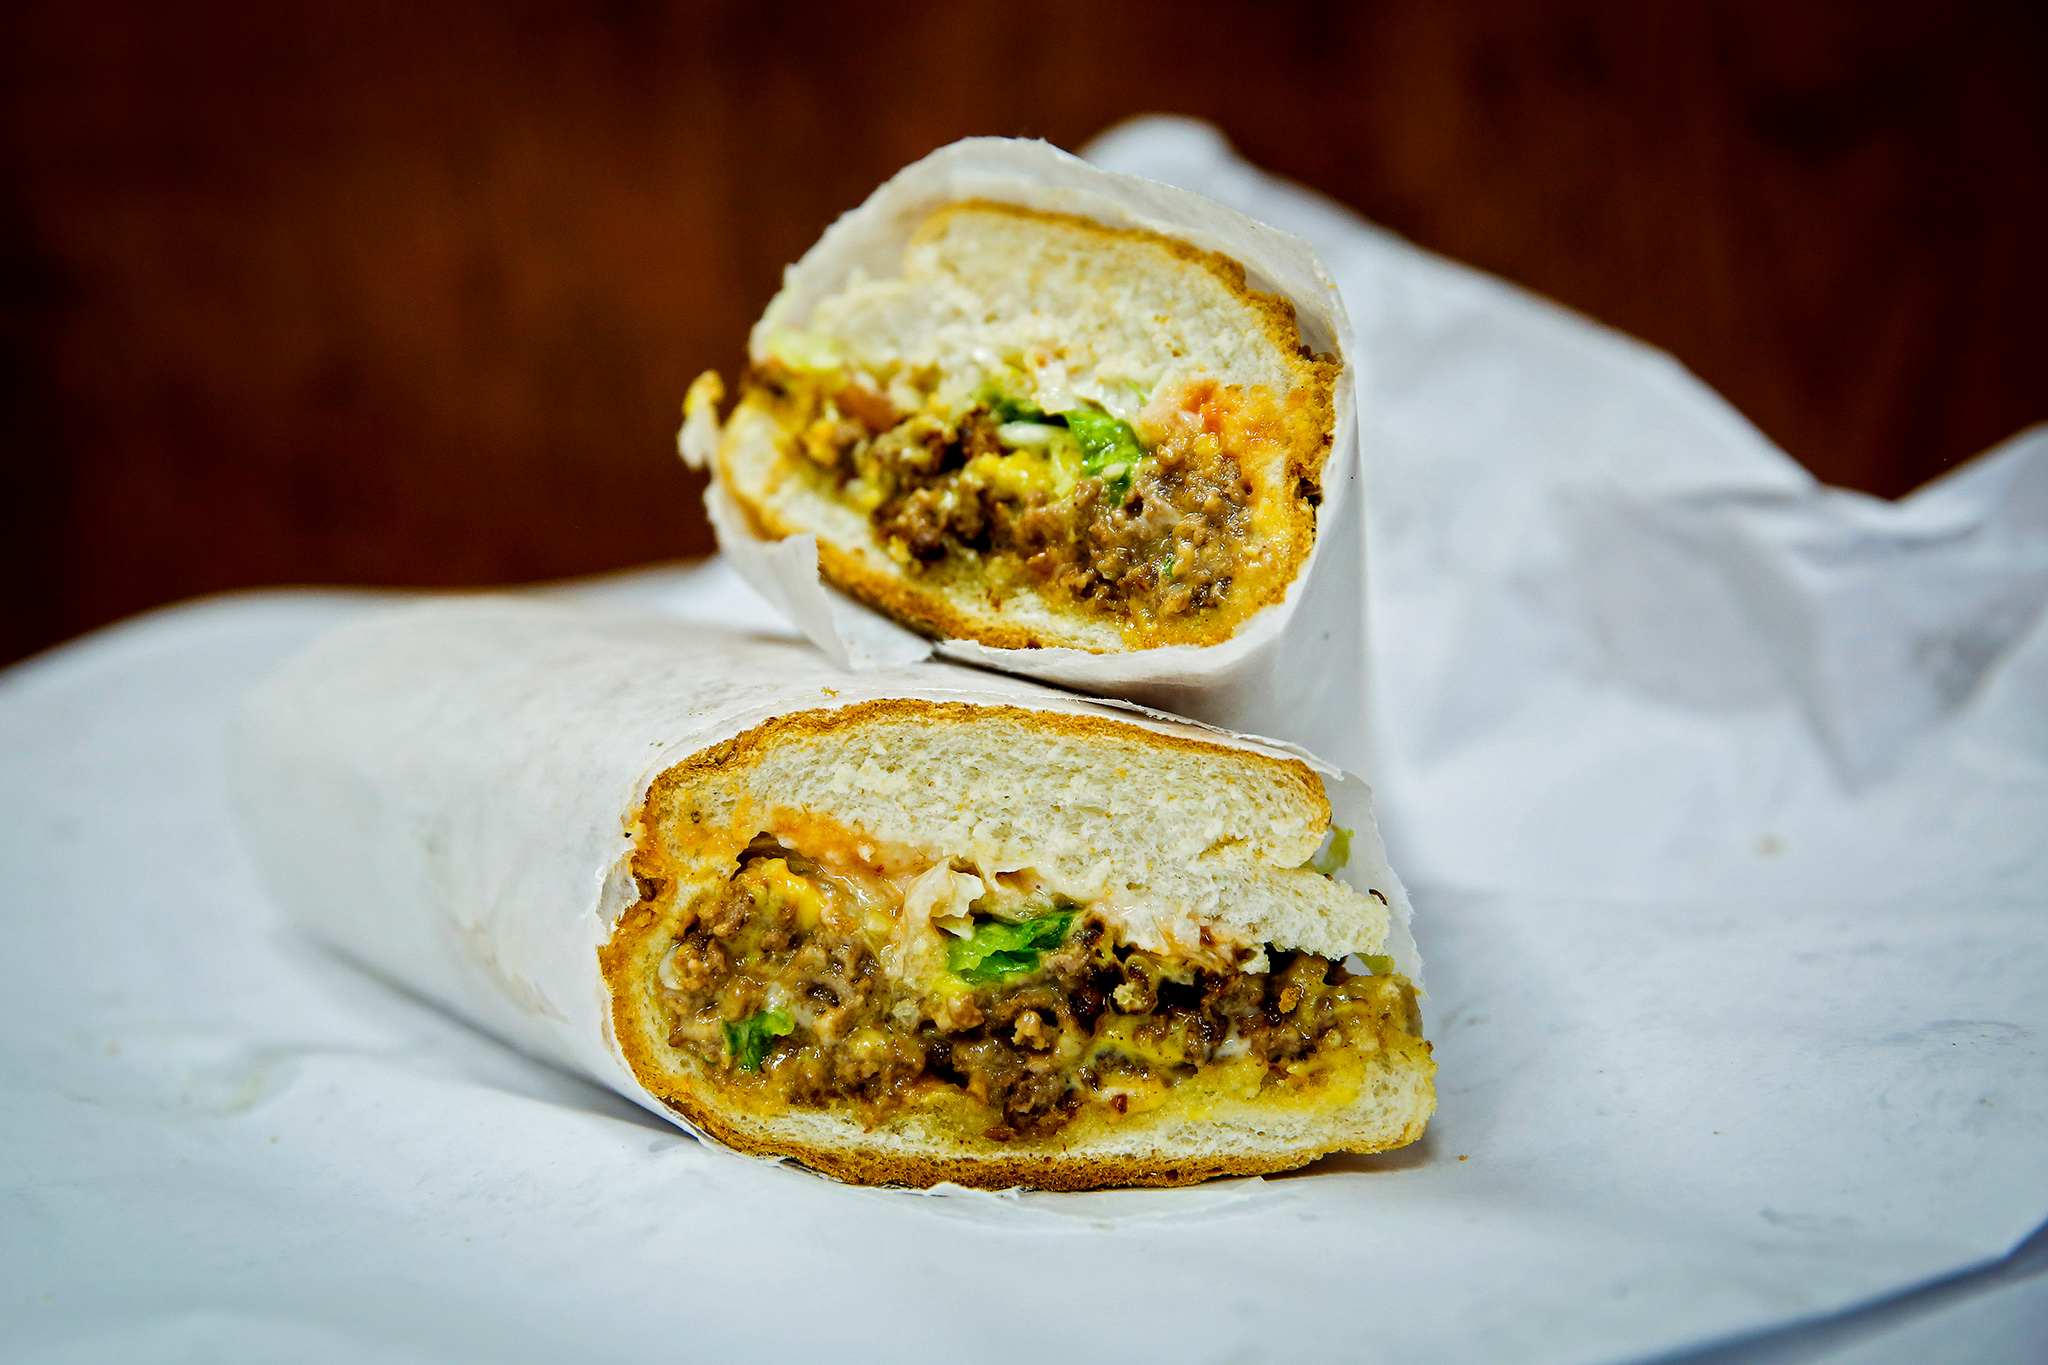 Berkeley’s new Berserk Burger brings NYC’s chopped cheese to the Bay Area